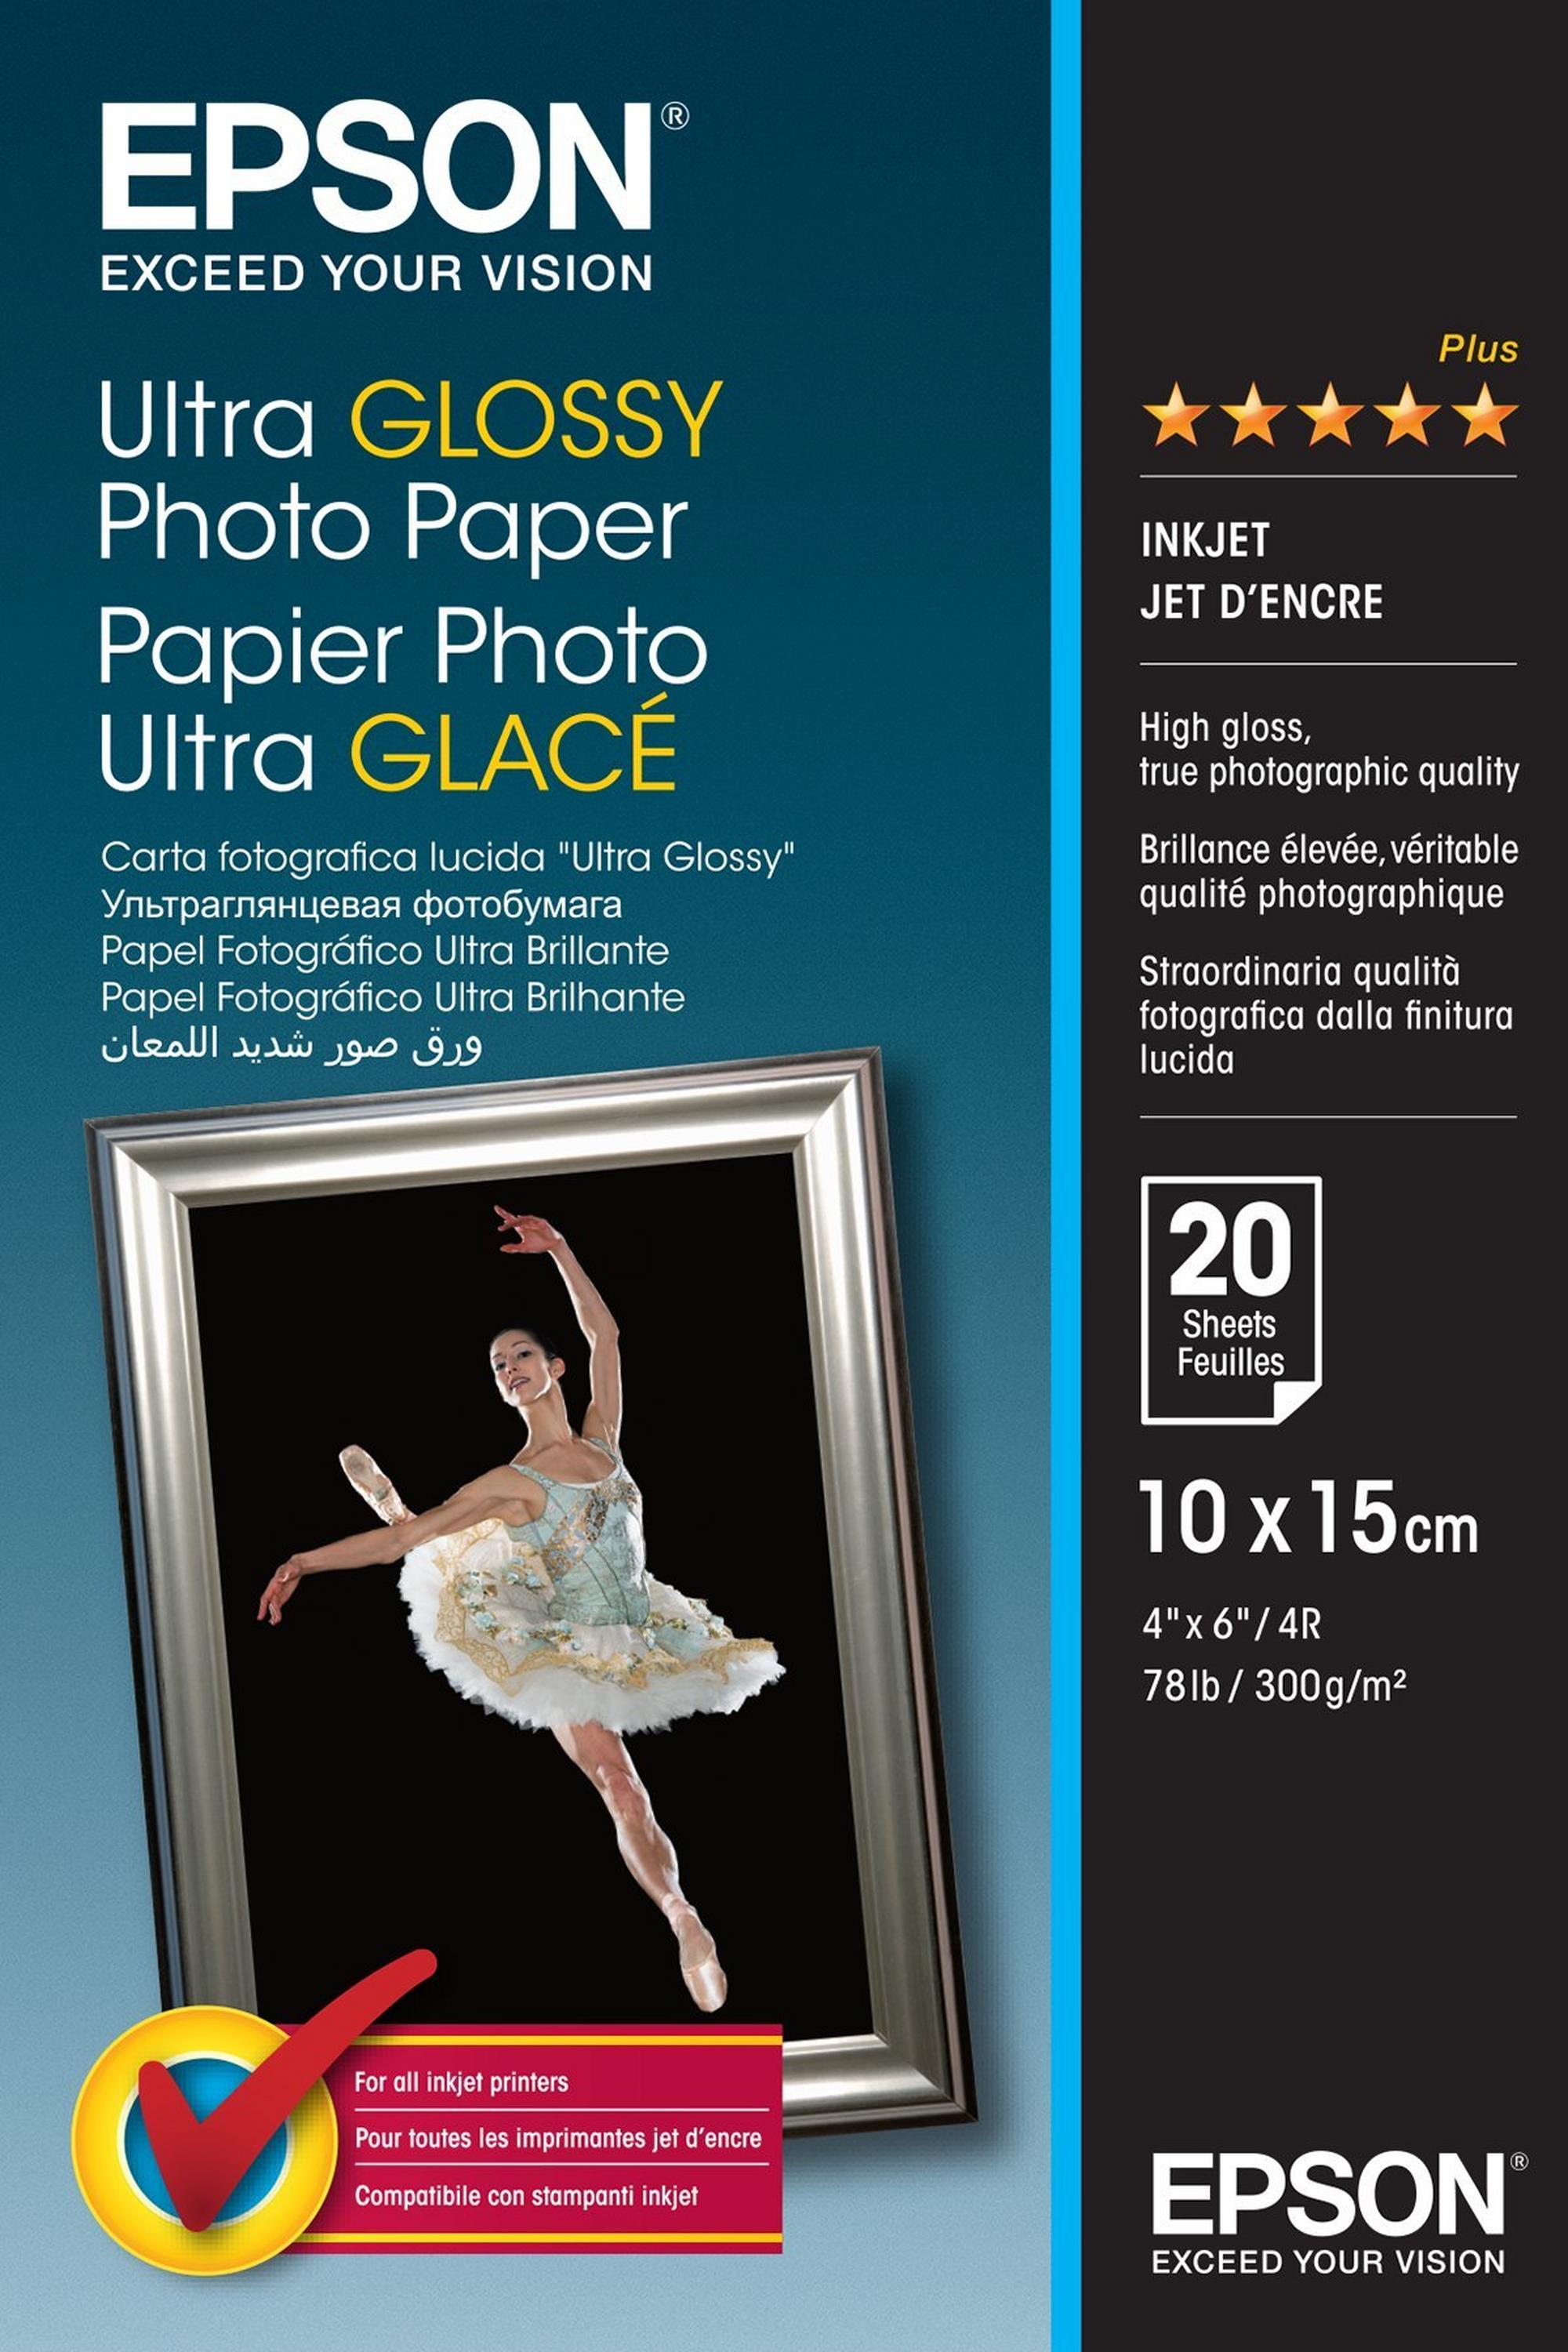 Epson Ultra Glossy Photo Paper - 10x15cm, 300g/m² - 20 Sheets